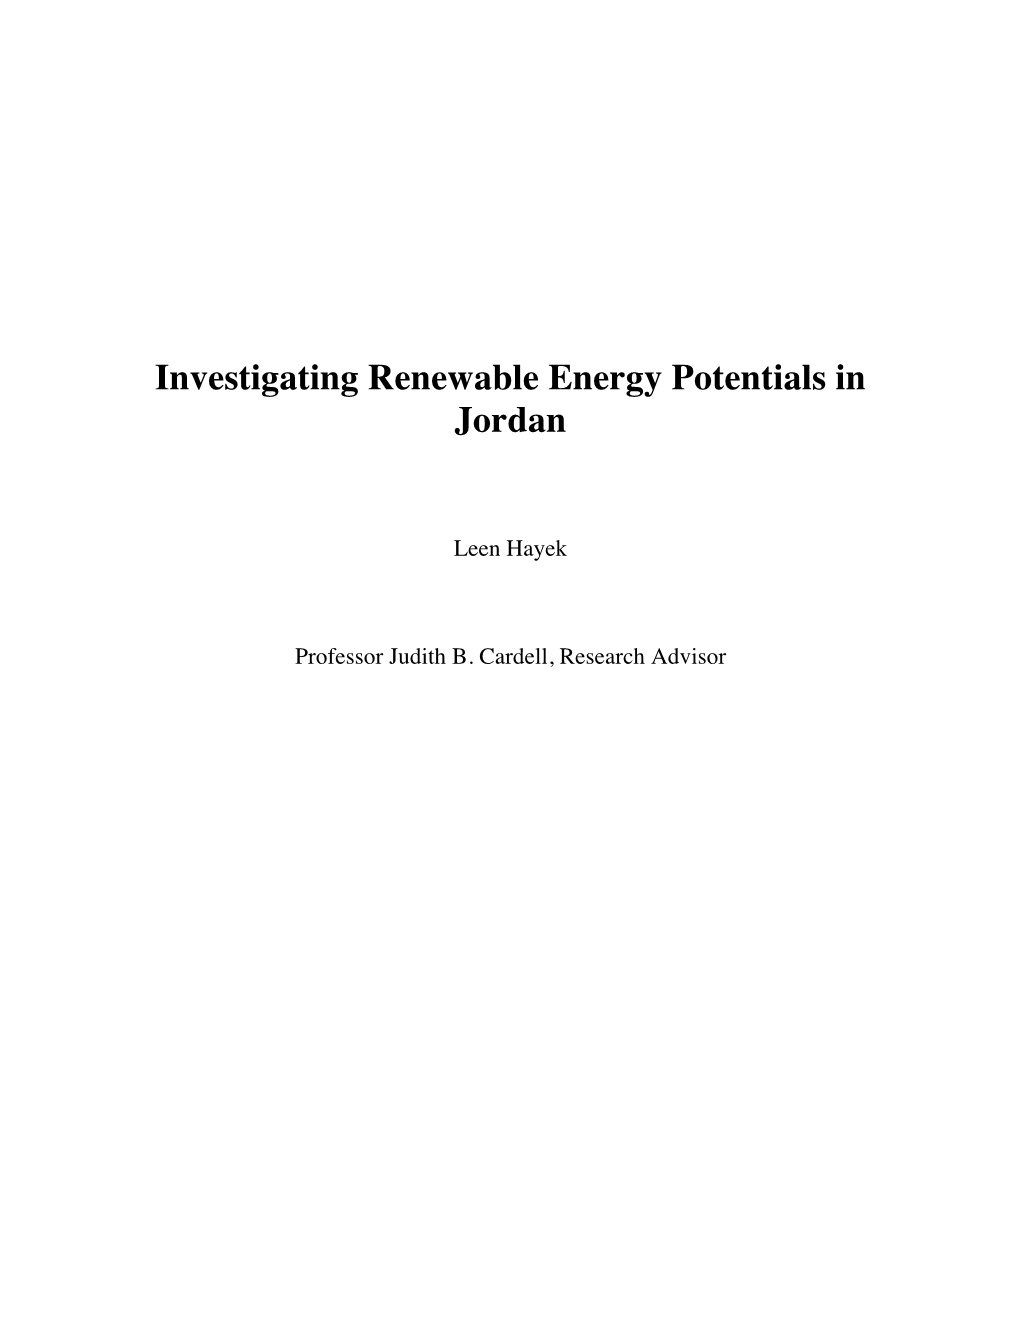 Investigating Renewable Energy Potentials in Jordan